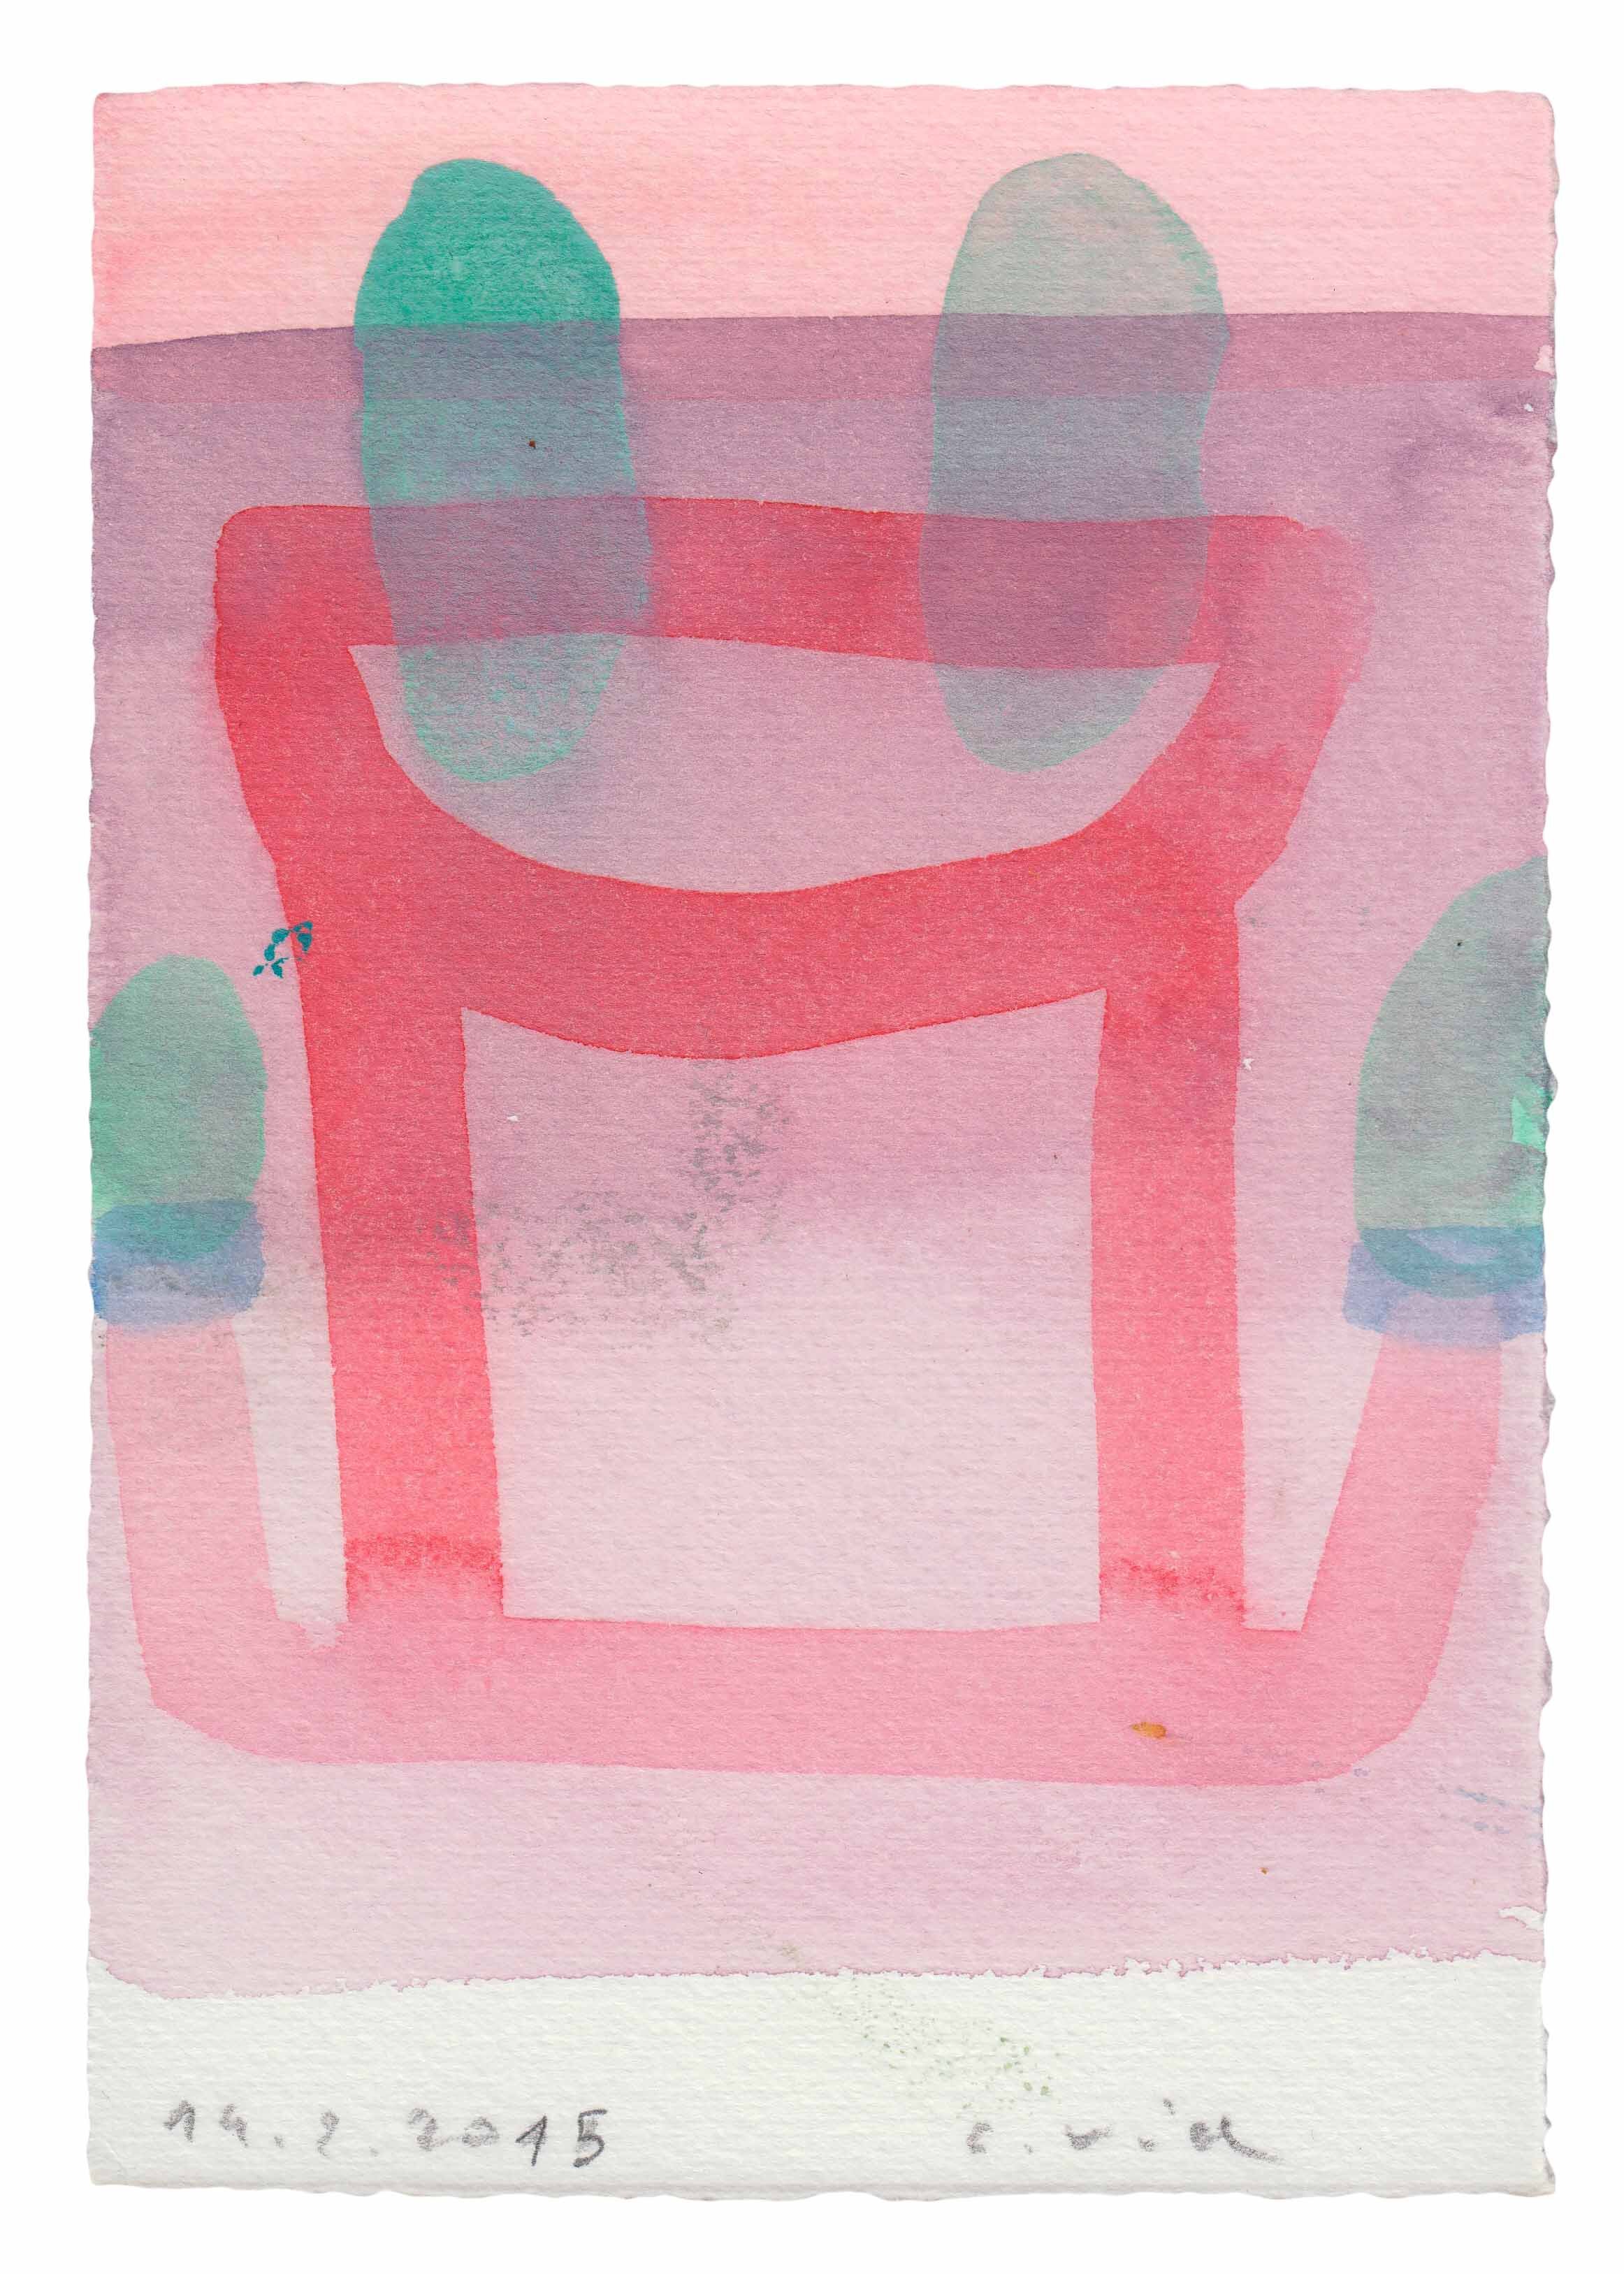  13 × 9 cm, Aquarell on Paper, 2015 